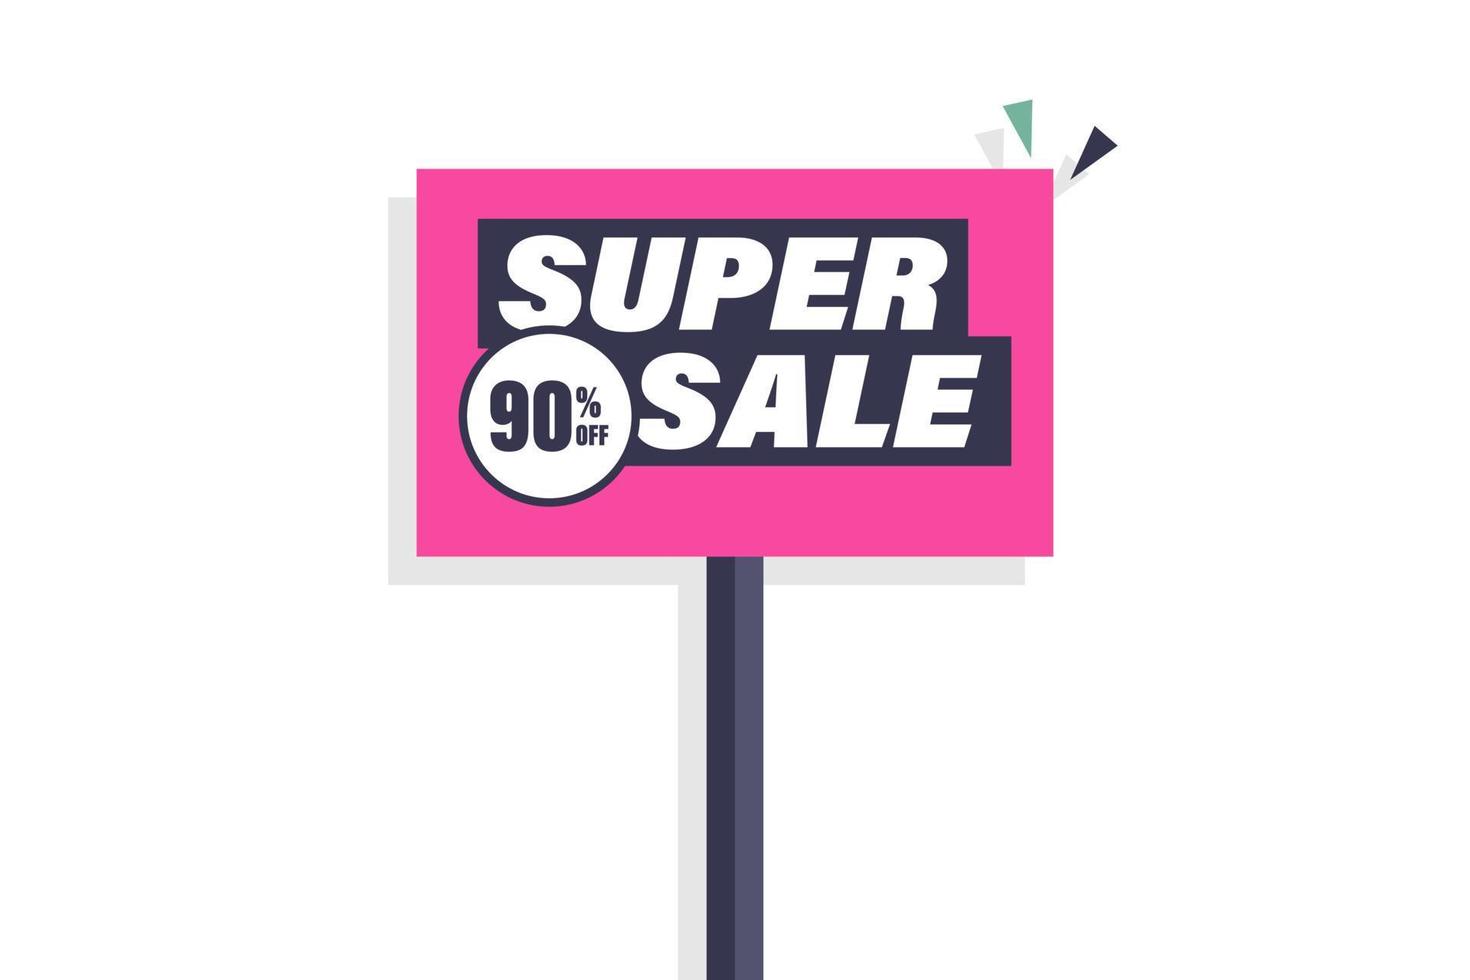 Super sale special promo discount banner web or material print, flat design vector illustration